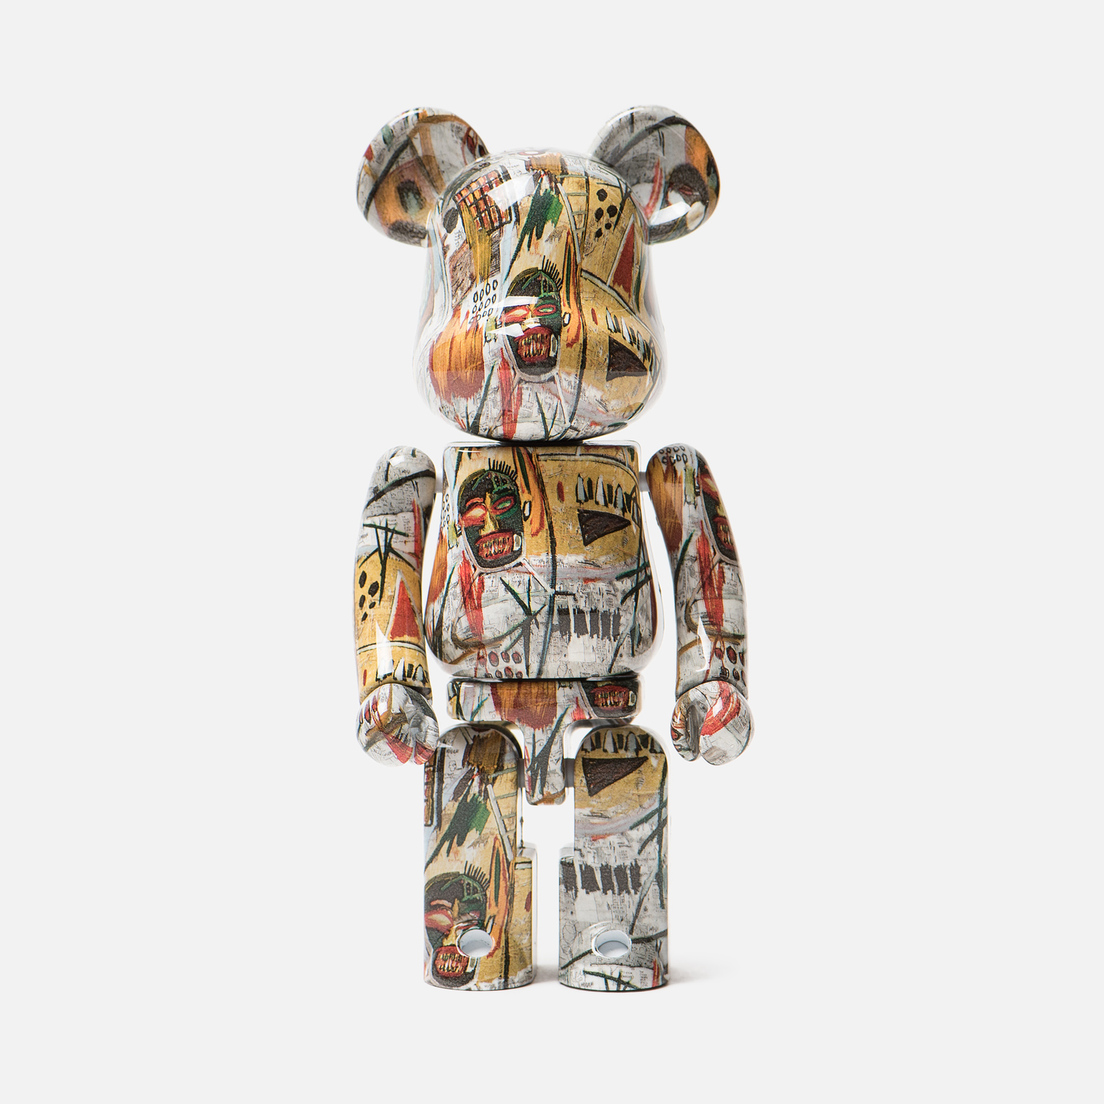 Medicom Toy Игрушка Super Alloyed Jean-Michel Basquiat 200%